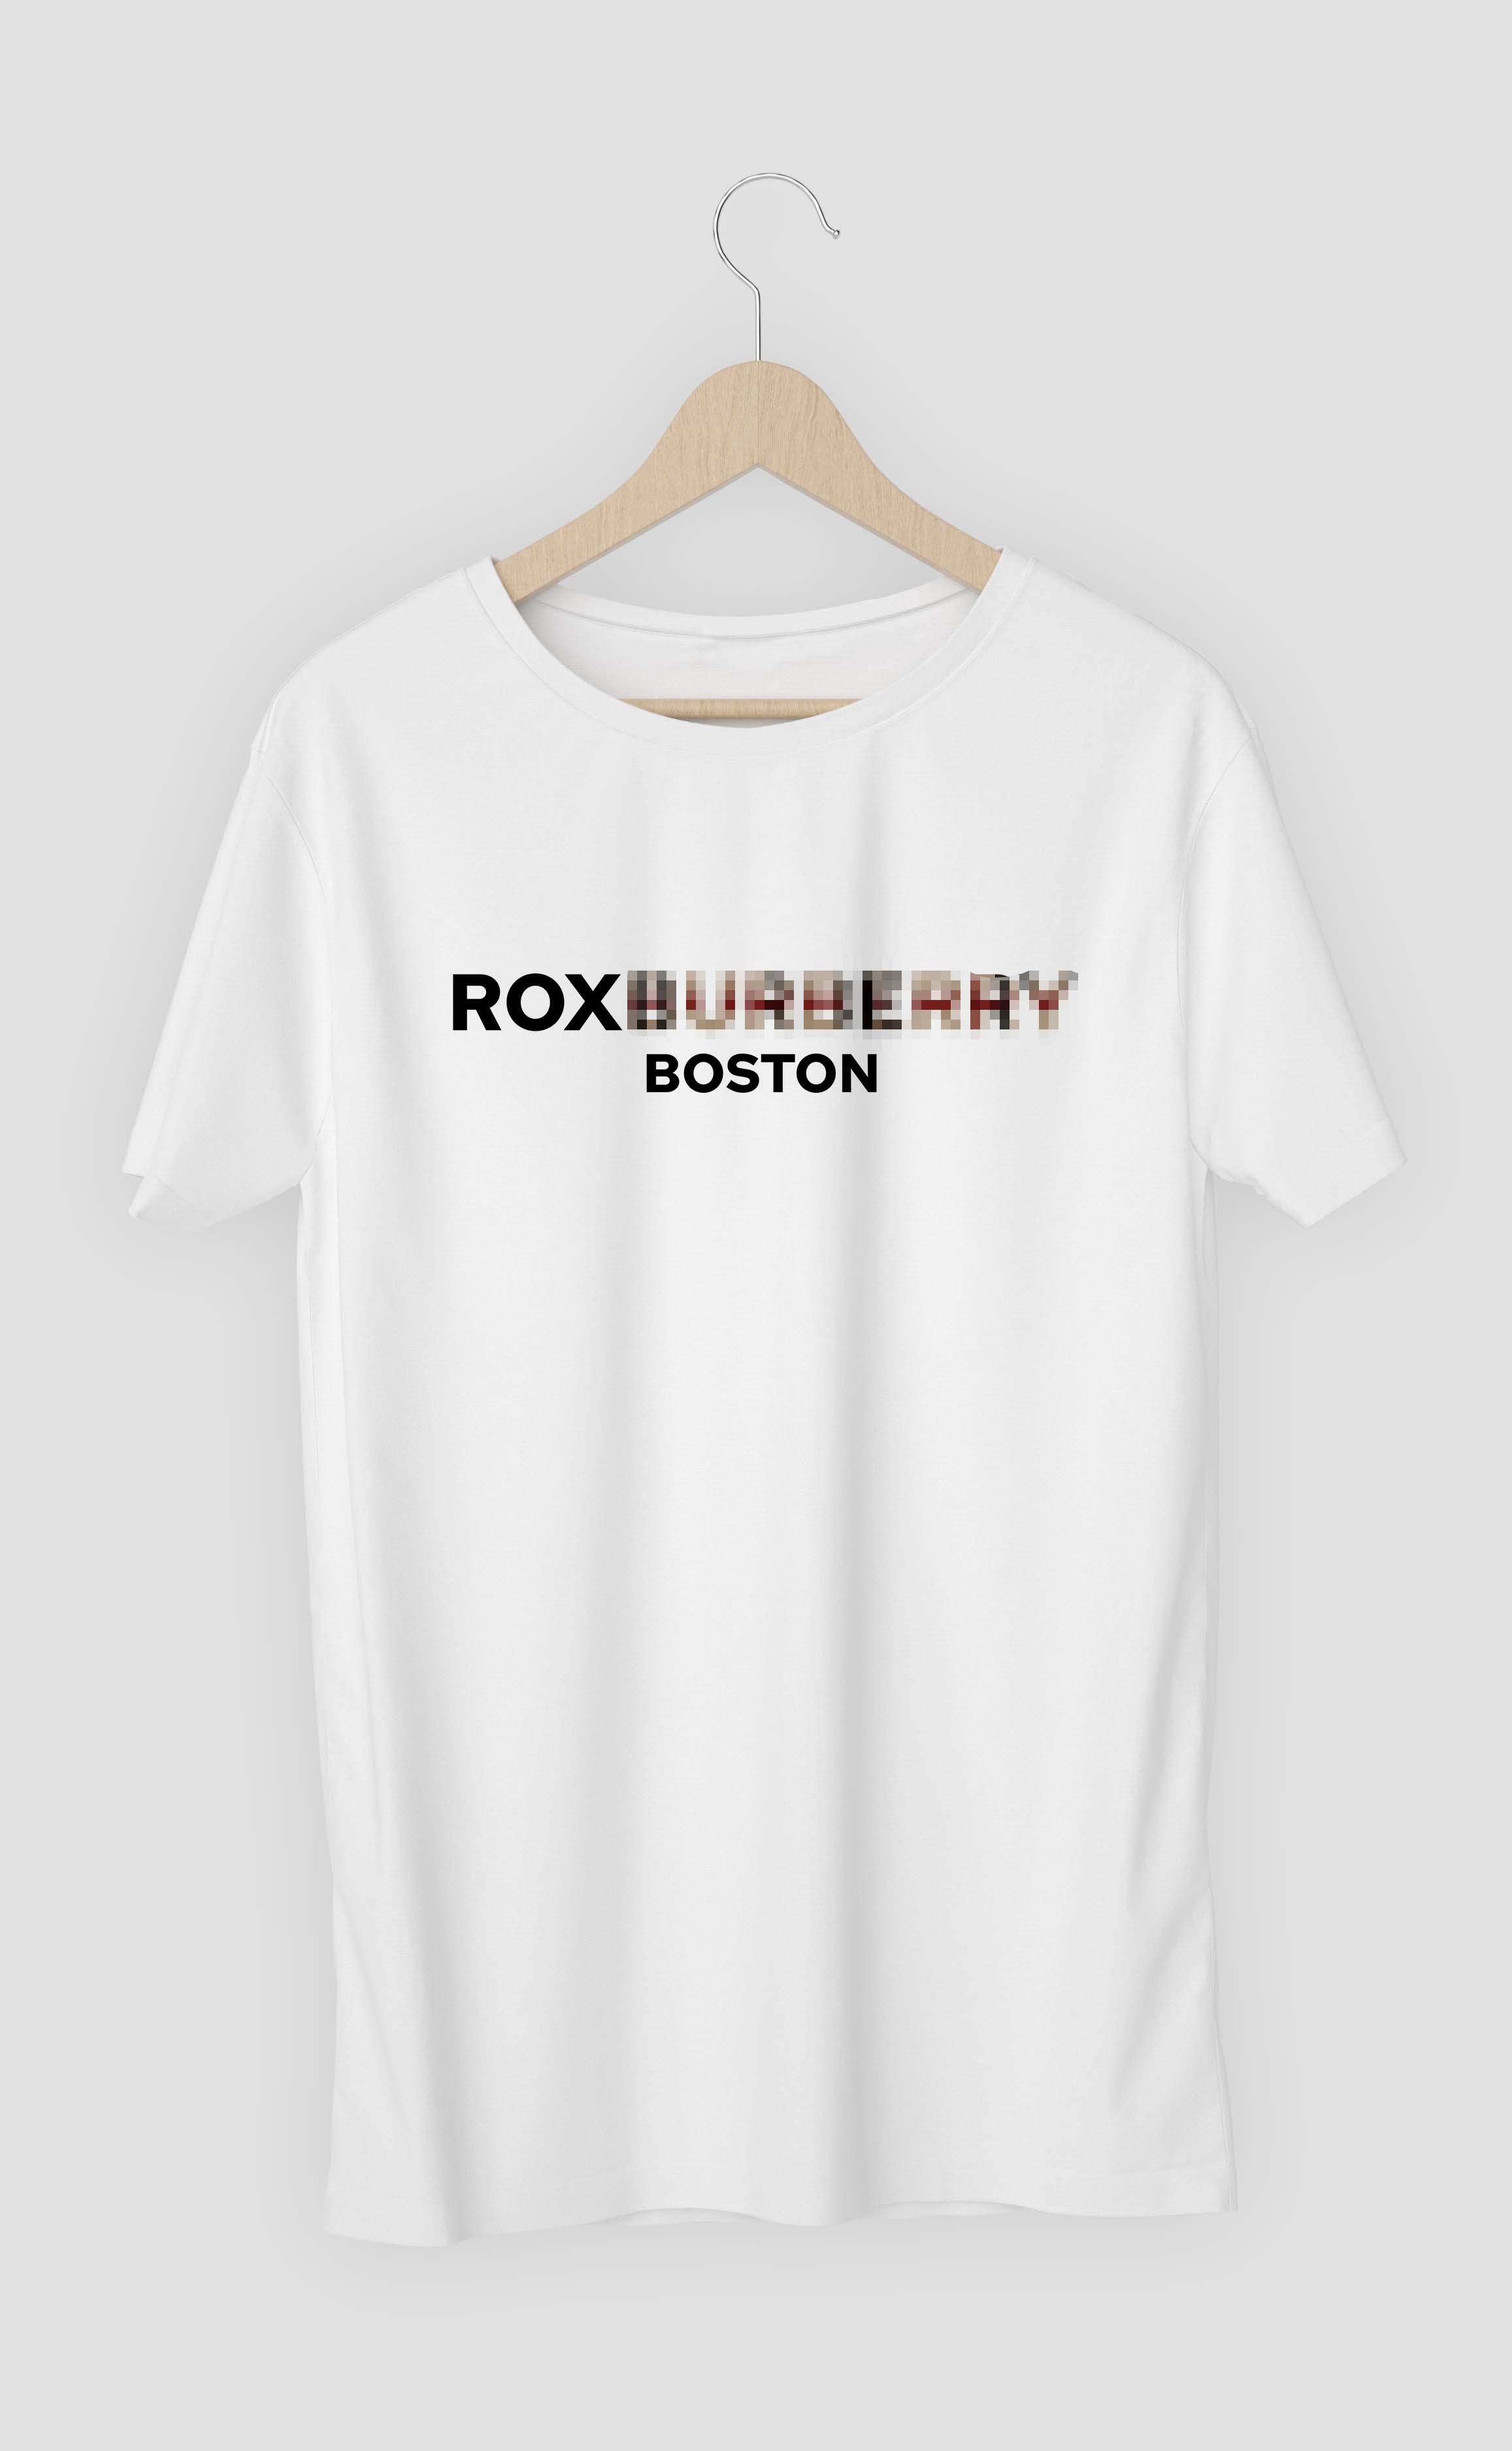 Roxburberry T-Shirt